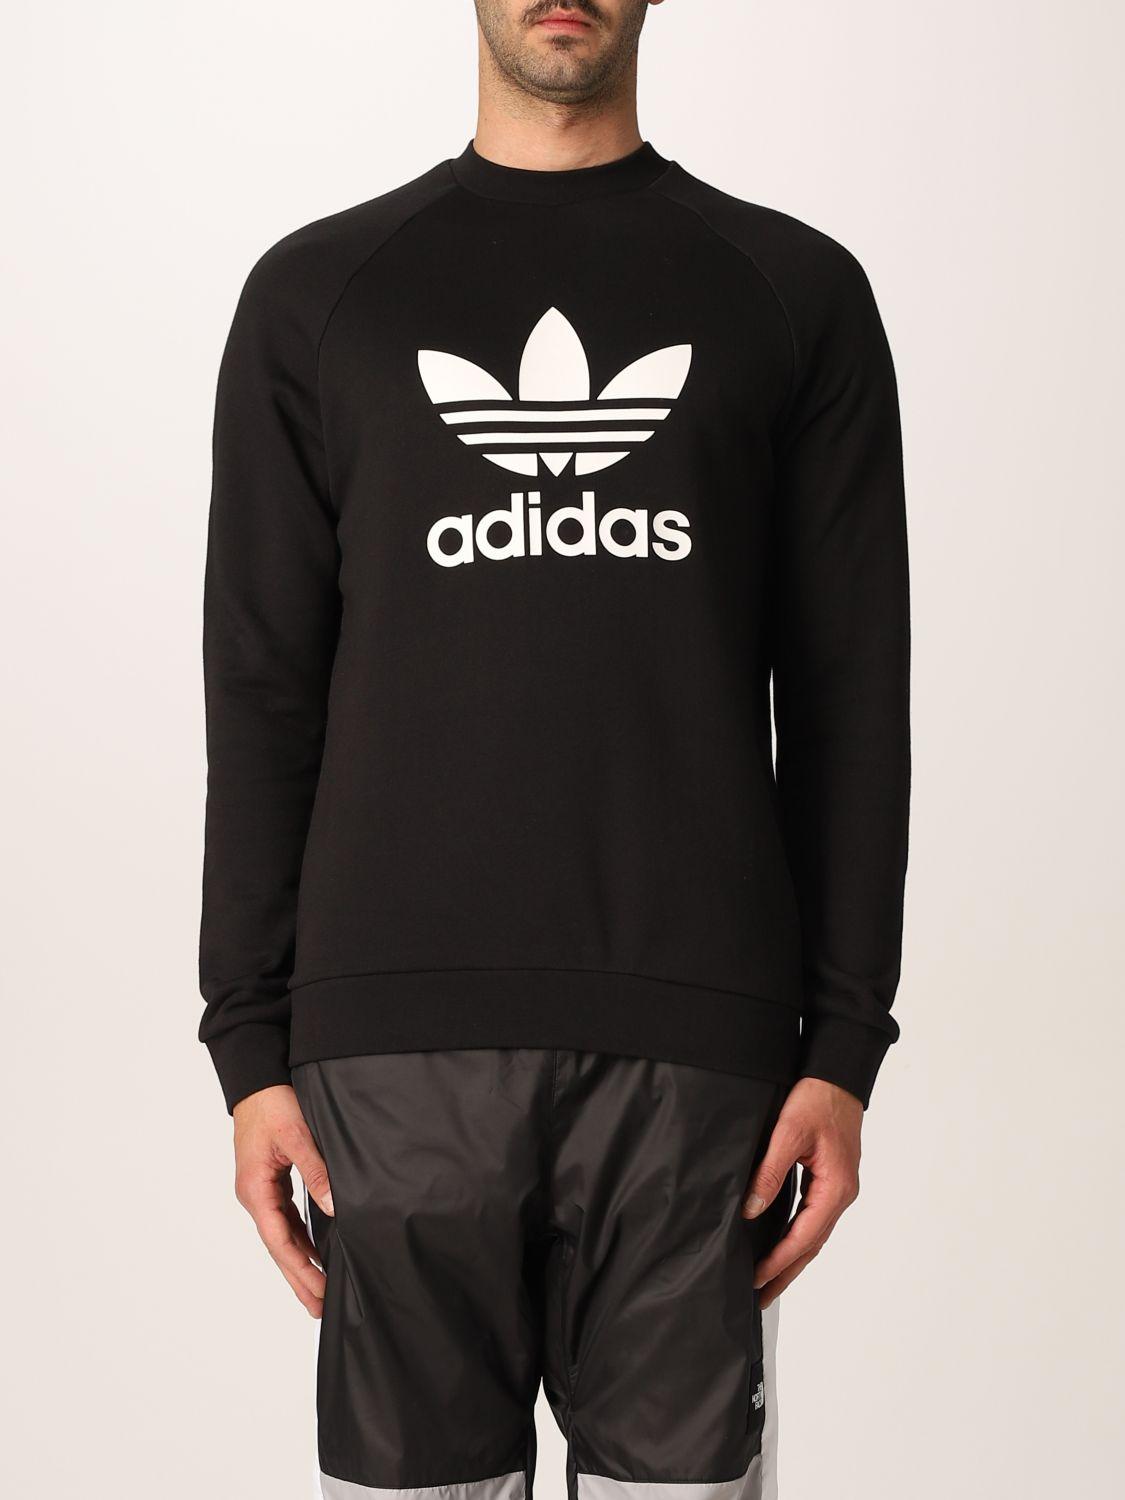 adidas Originals Sweatshirt in Black for Men - Lyst